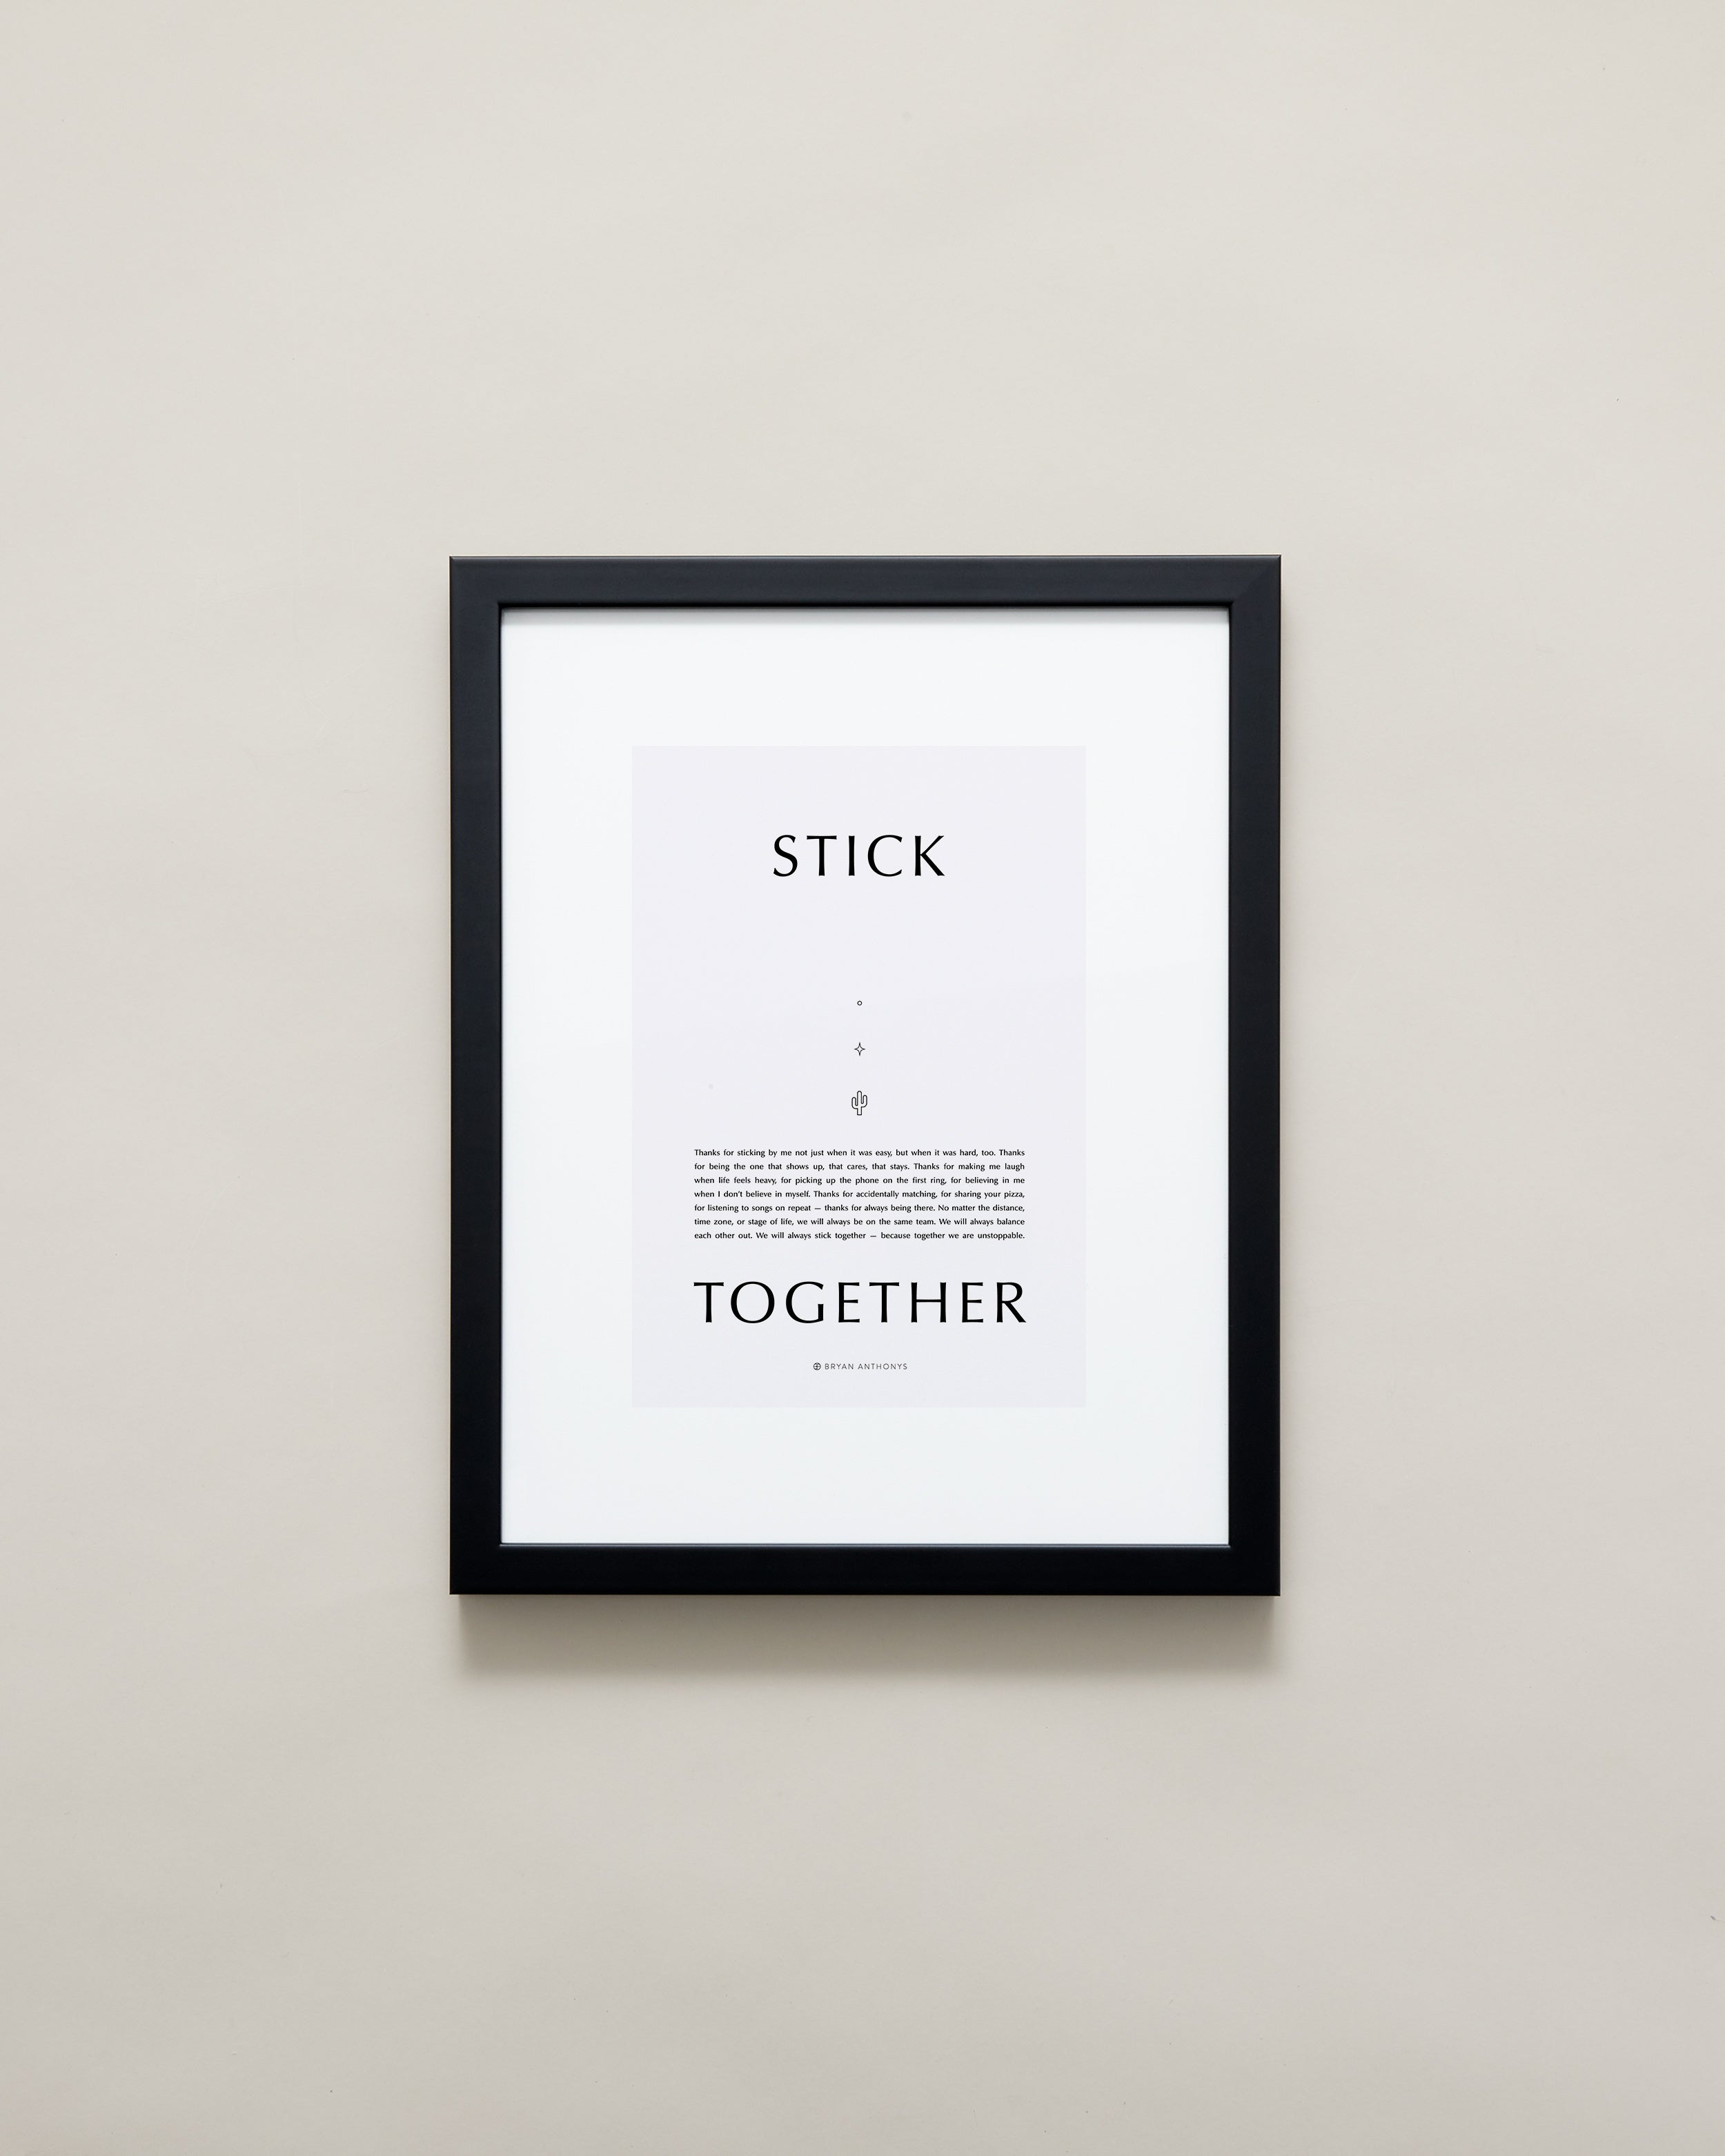 Stick Together Iconic Framed Print showcase small black frame